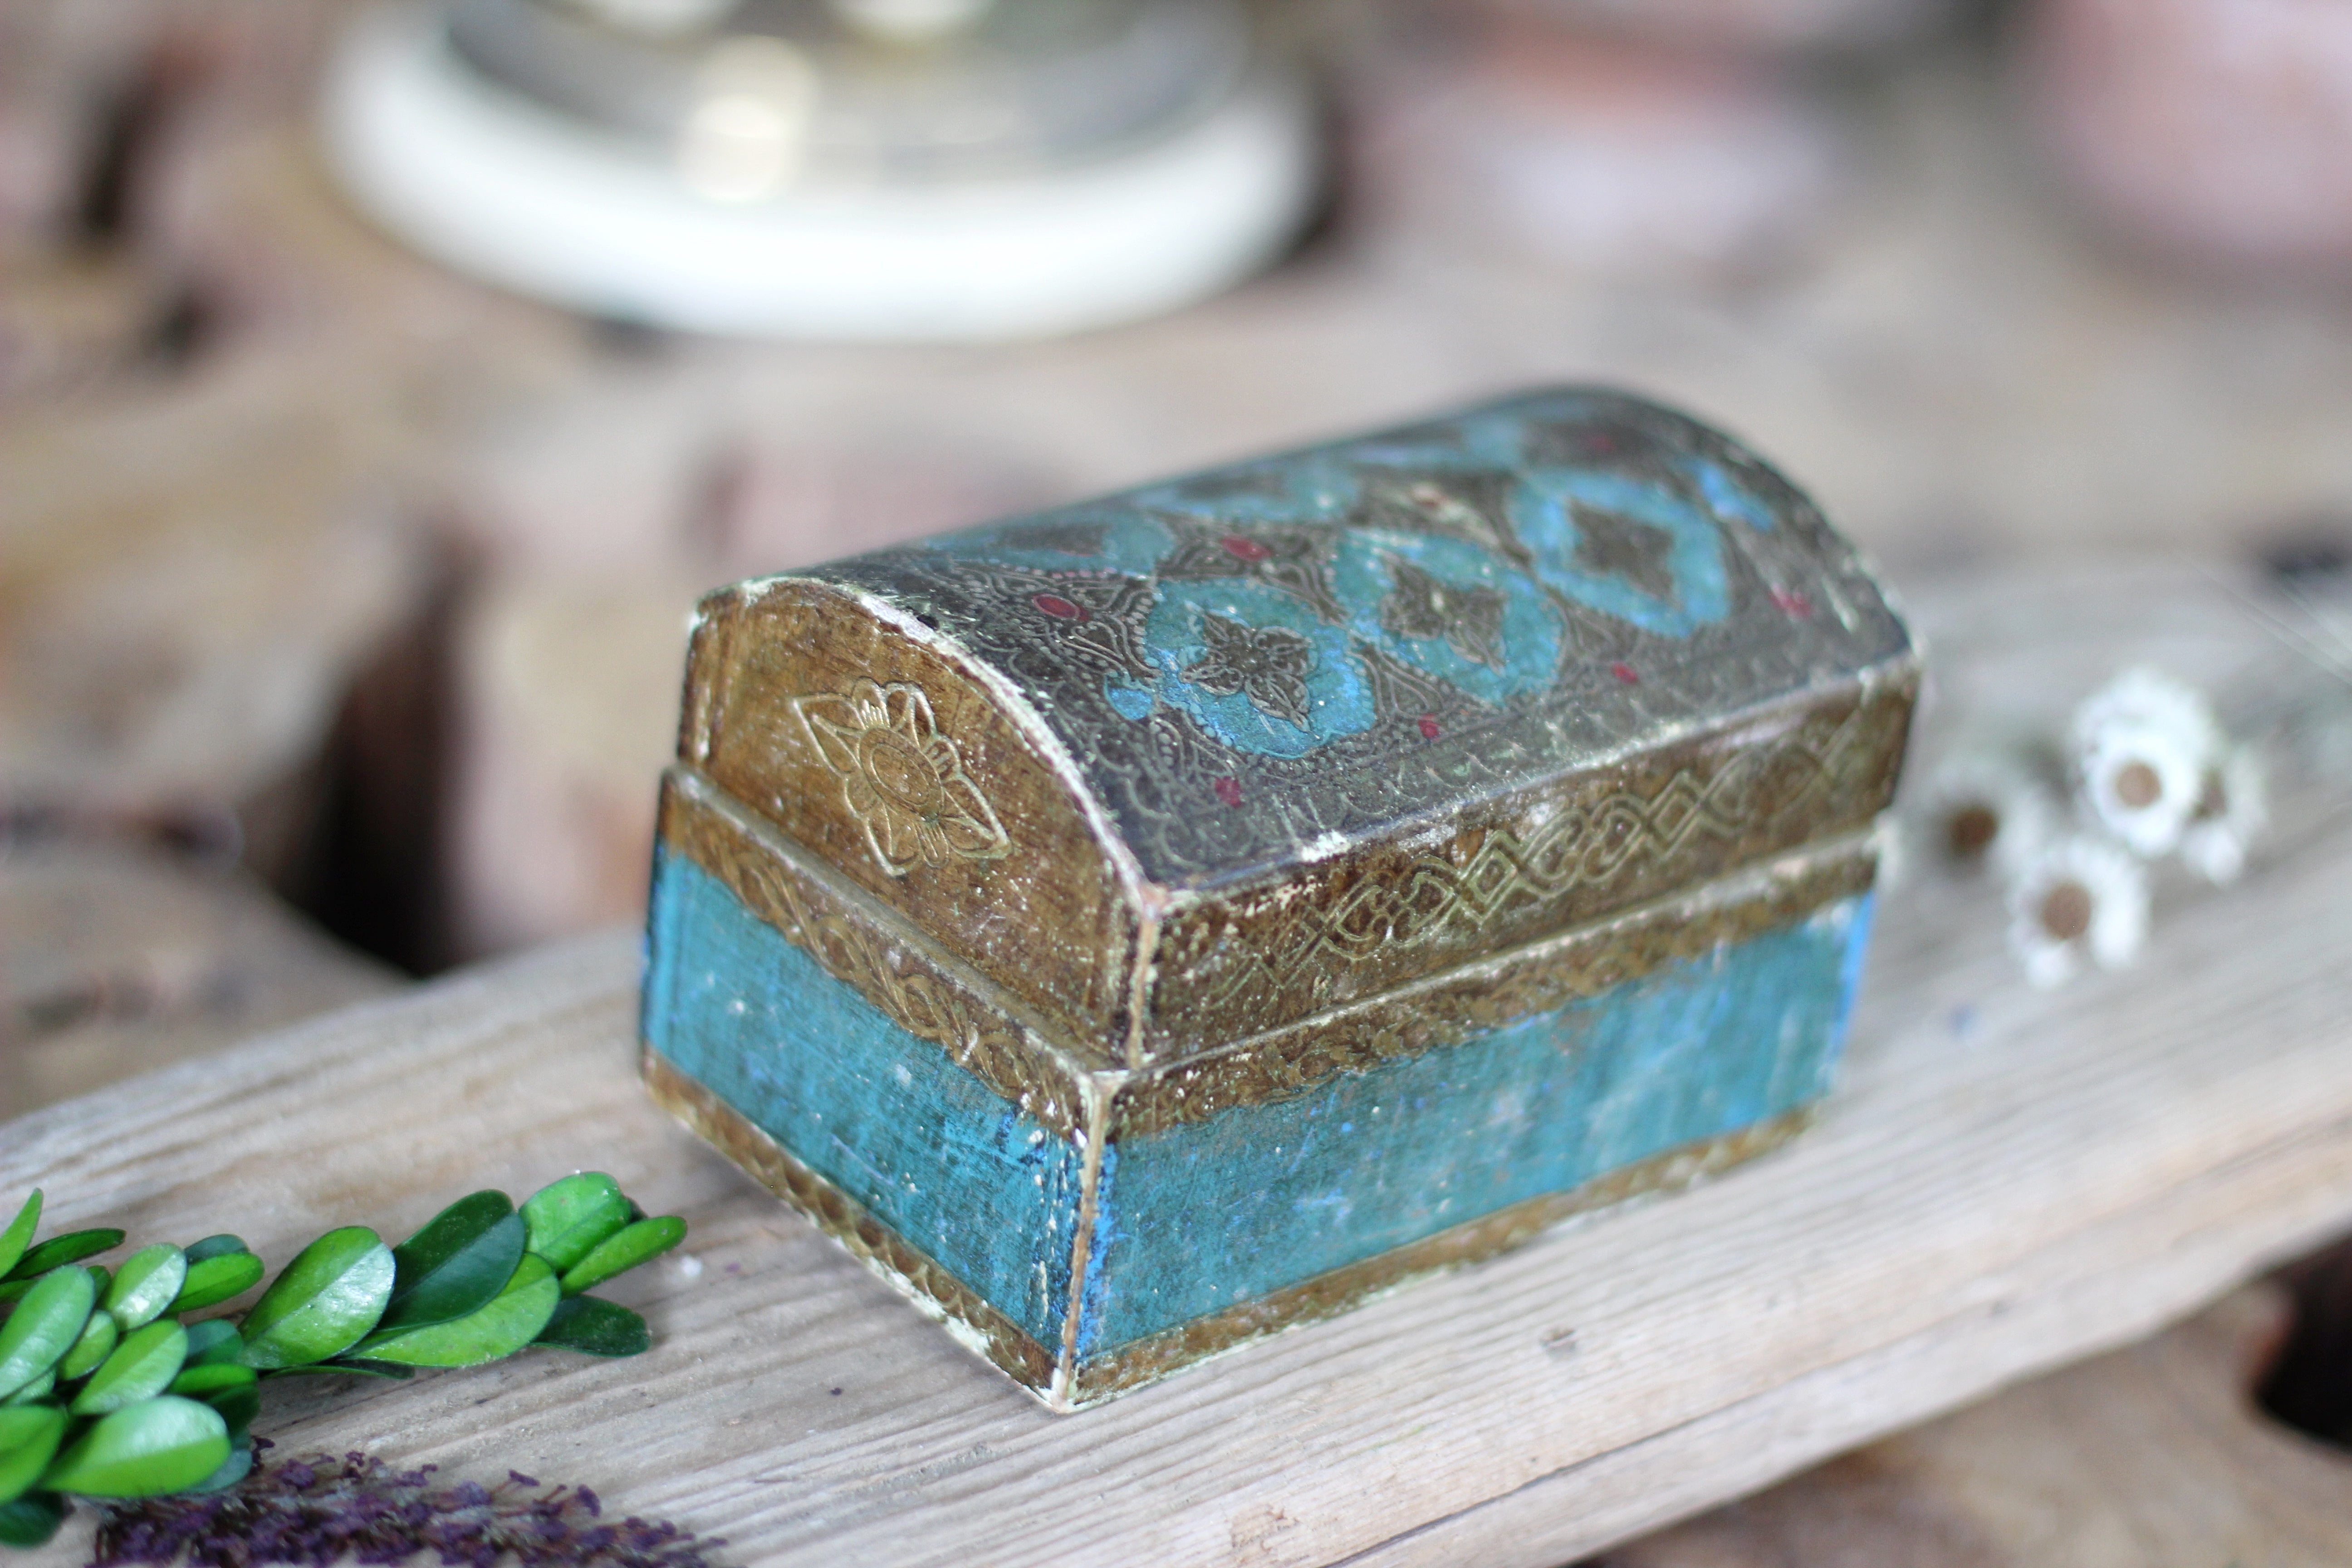 Antique Teal Florentine Treasure Chest Jewelry Box